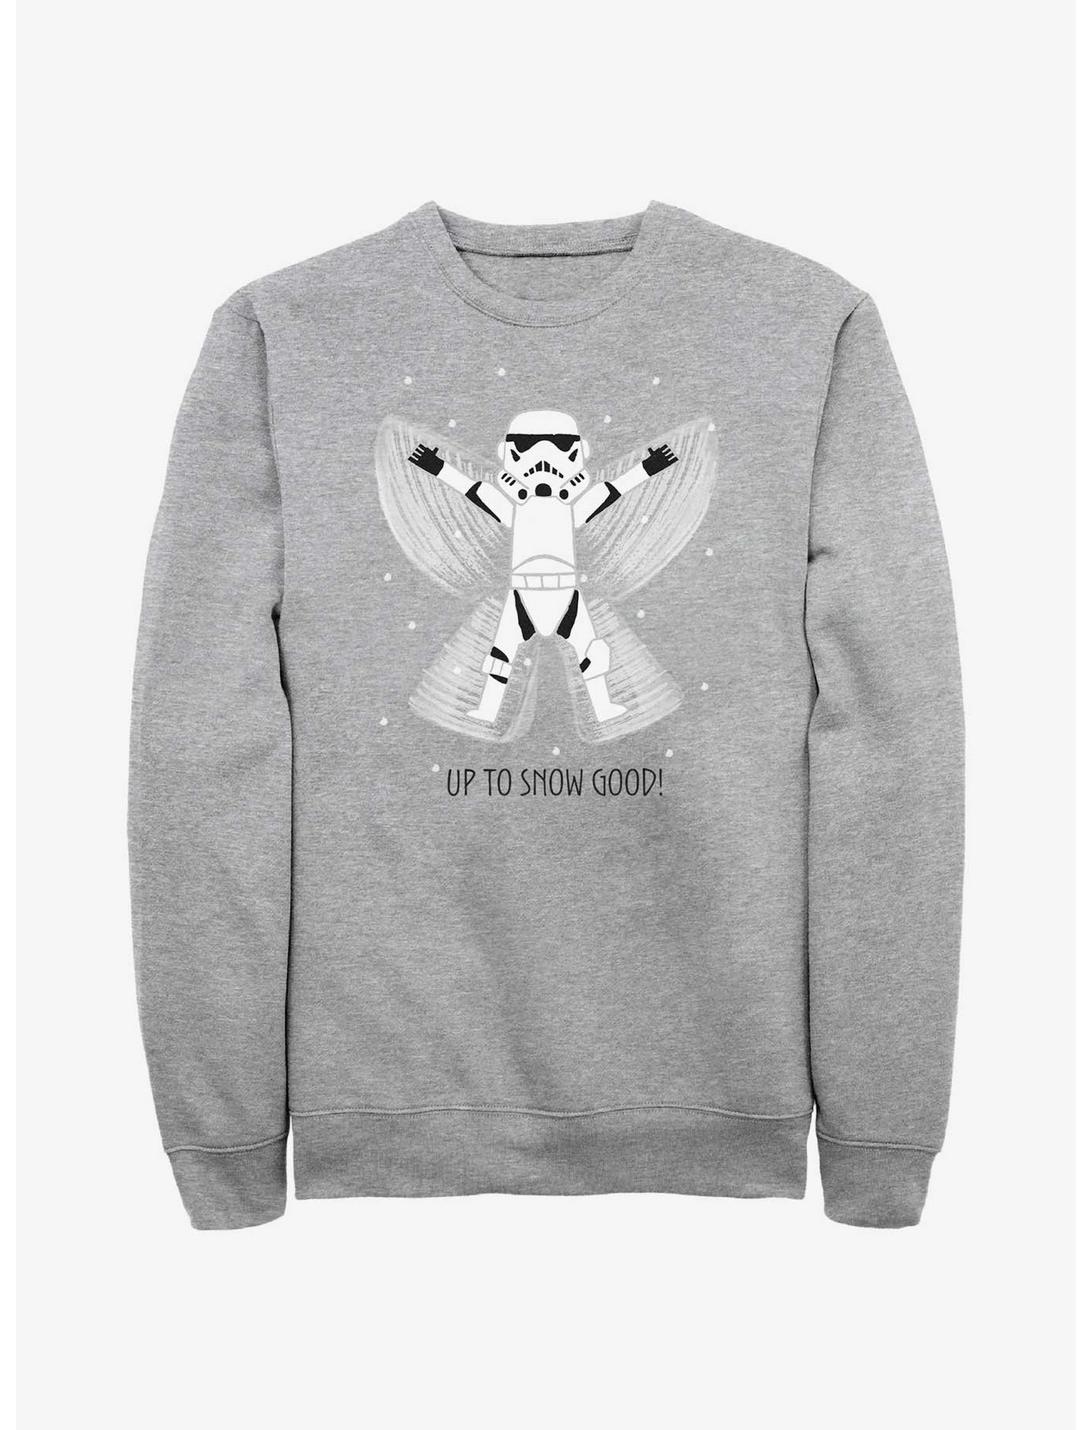 Star Wars Storm Trooper Up To Snow Good Sweatshirt, ATH HTR, hi-res